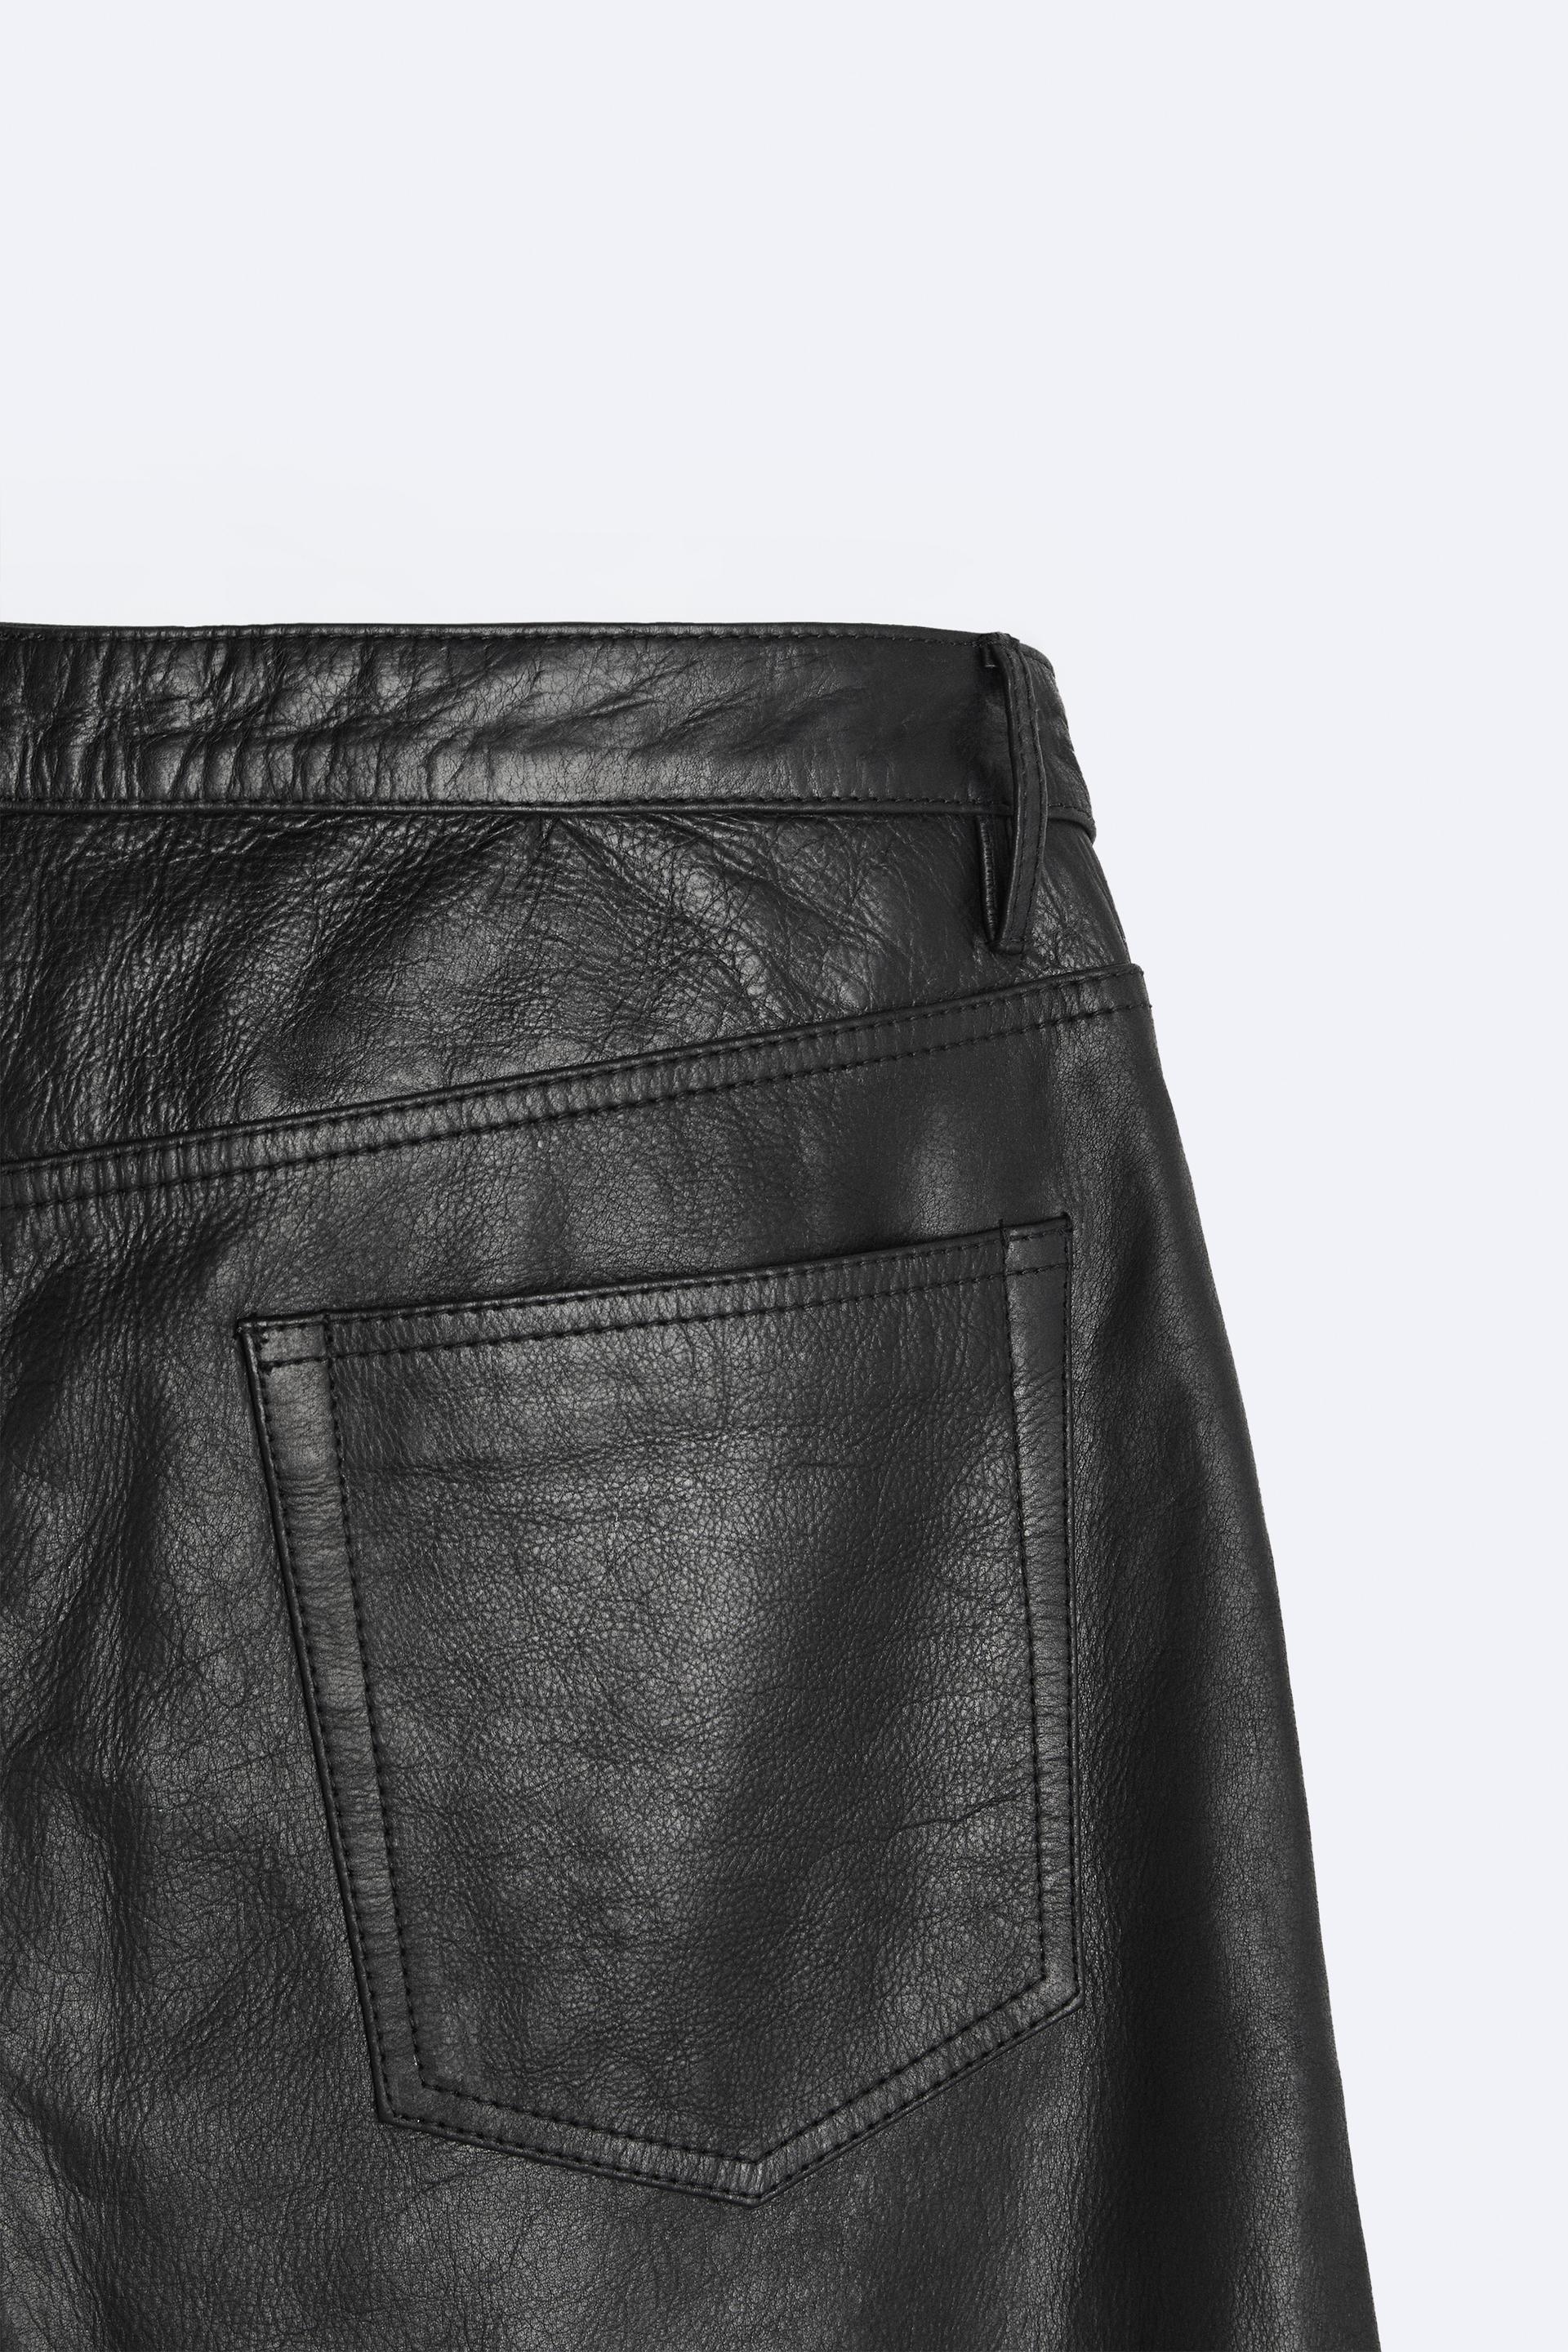 ZARA Leather Pants Green Size XS - $26 - From Kiona